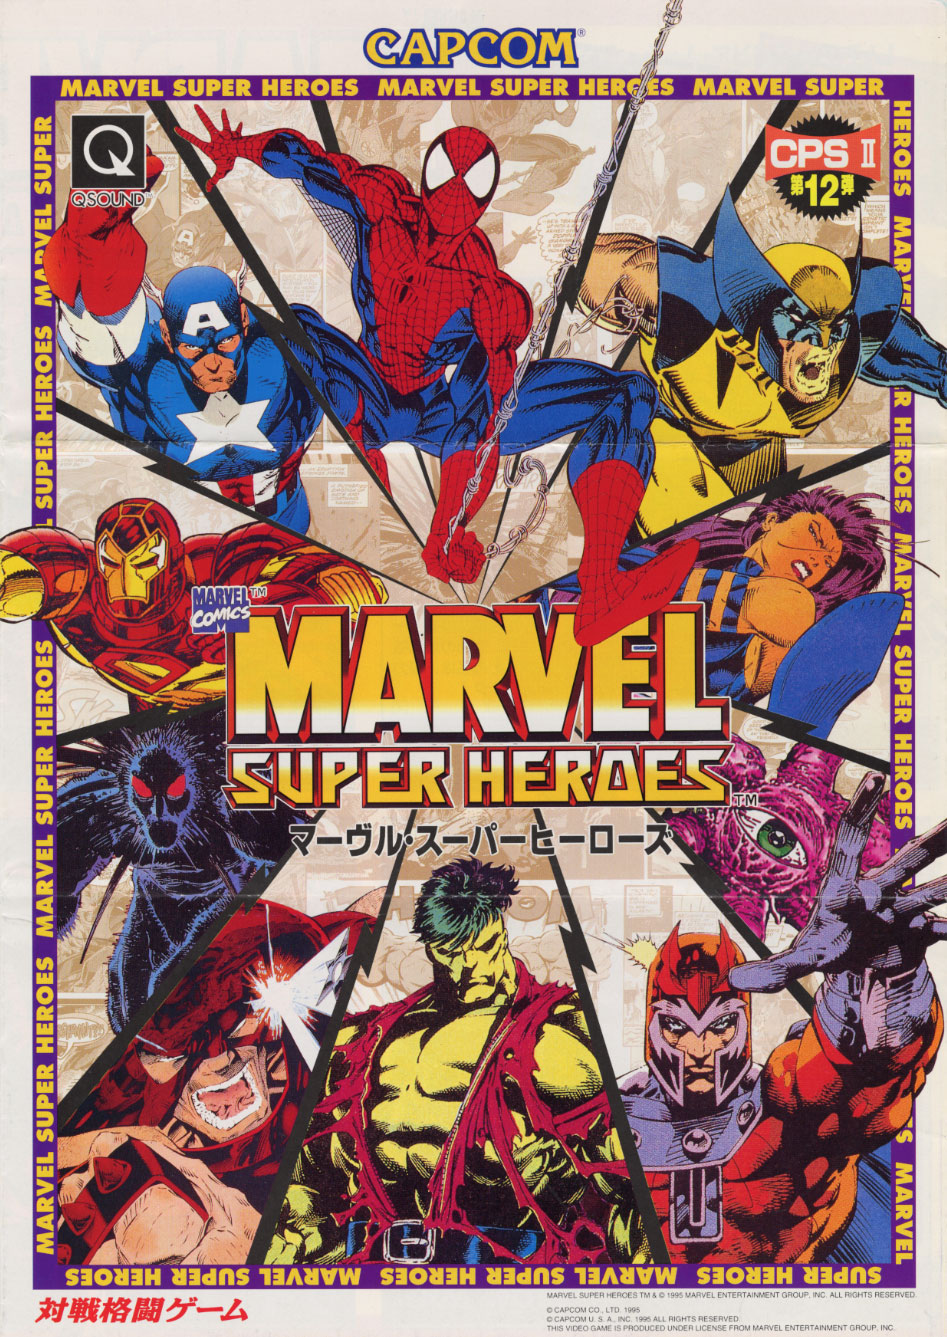 Marvel Super Heroes vs Street Fighter/Ryu - SuperCombo Wiki